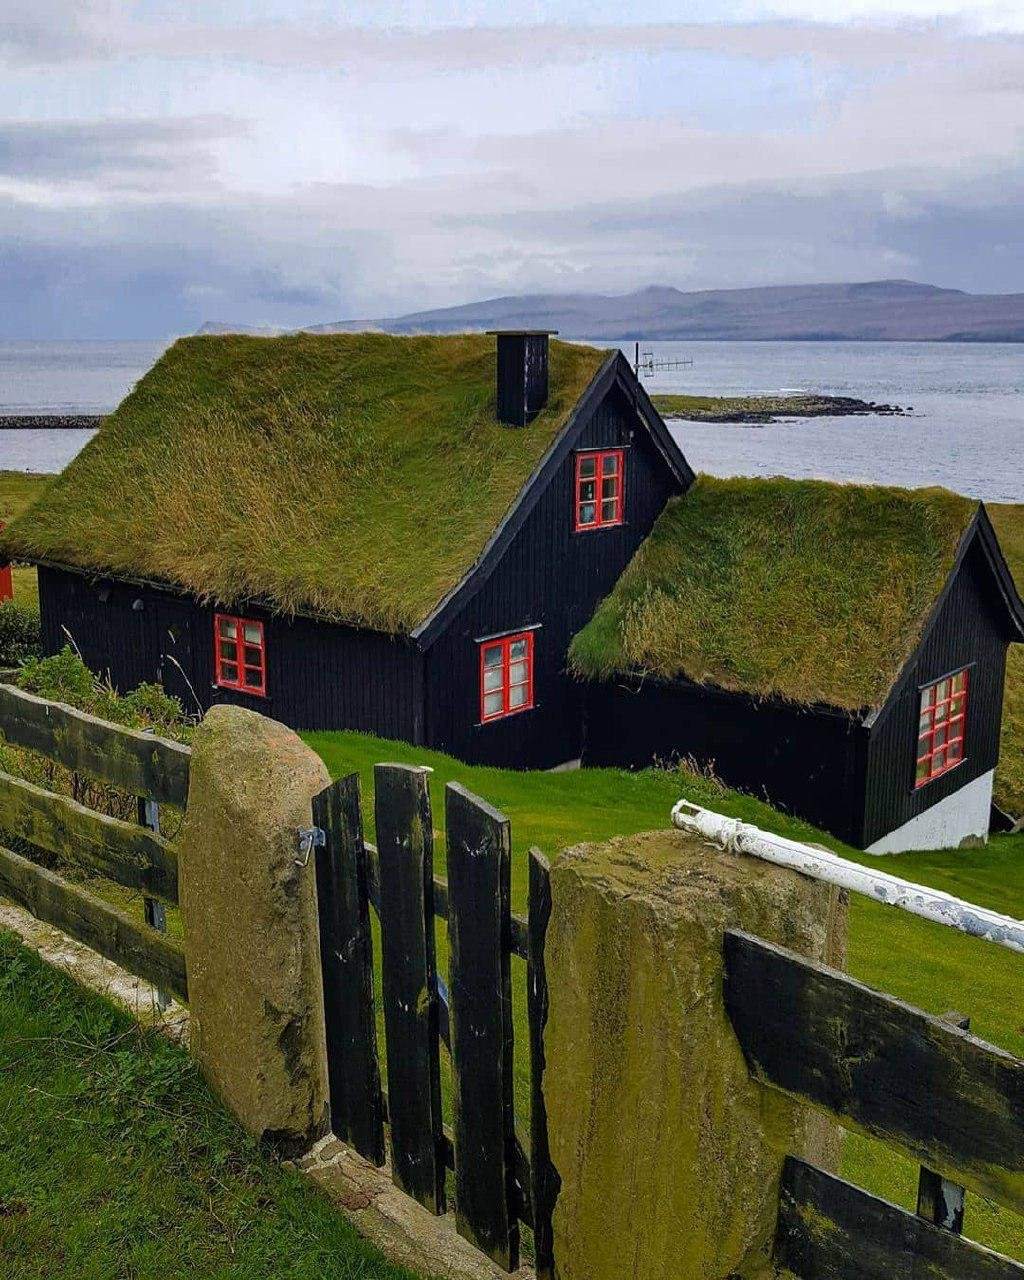 Porkeri Church Фарерские острова. Маяк Мичинес Фарерские острова. Фарерские острова остров Калсой. Кому принадлежат фарерские острова